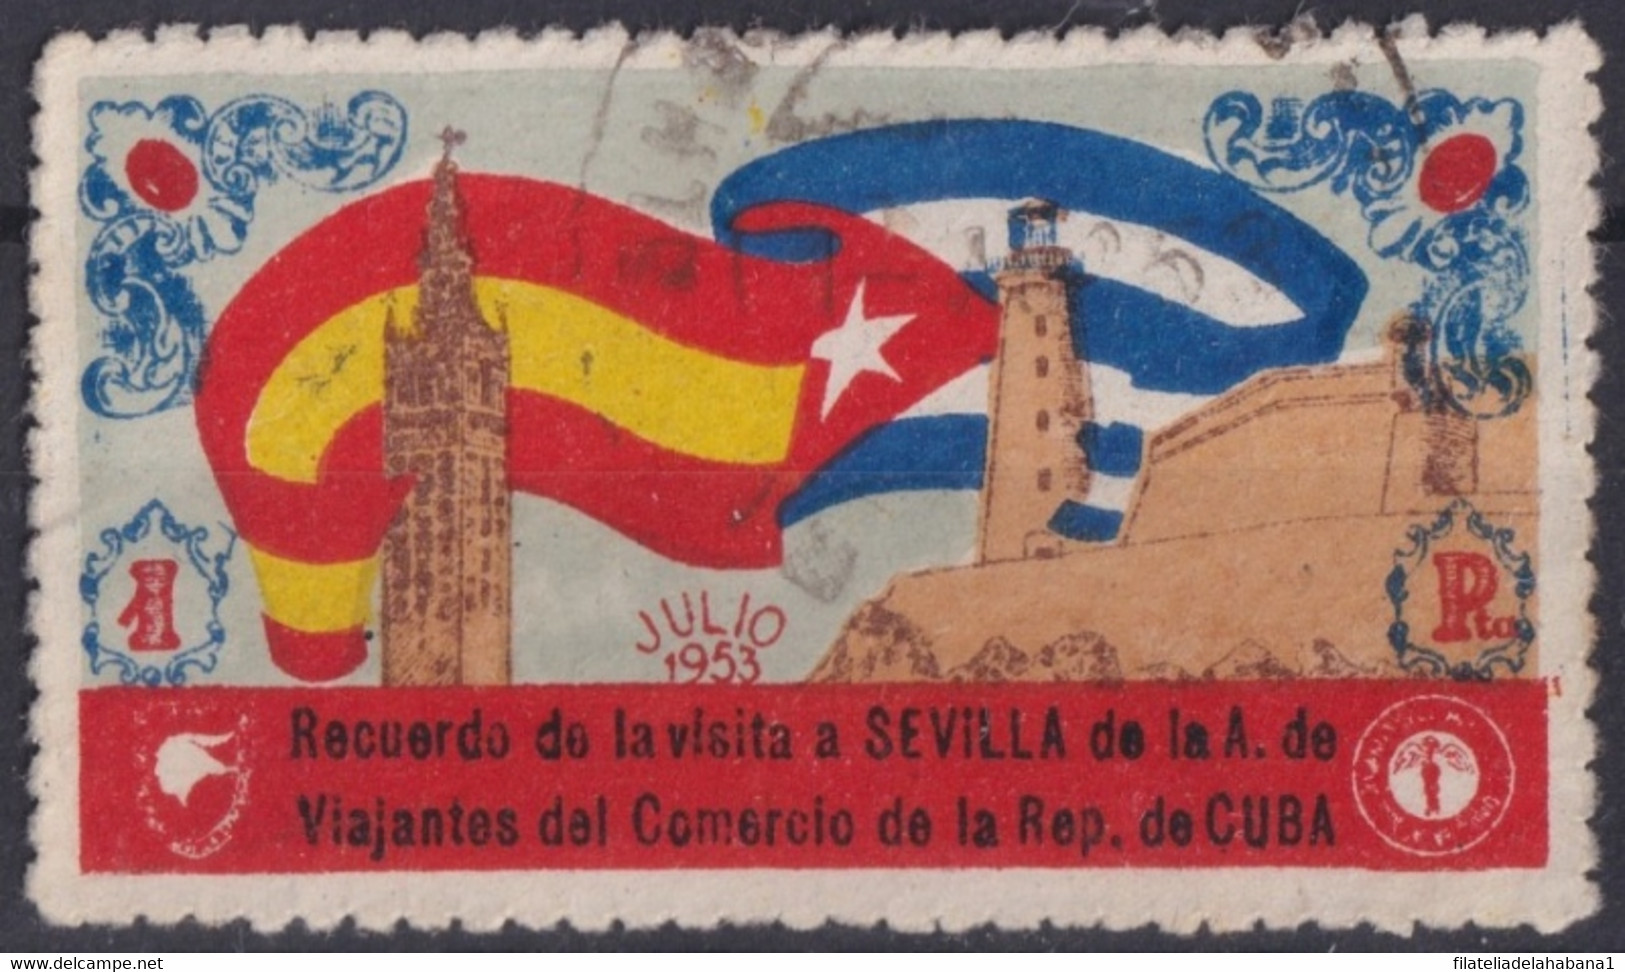 VI-517 CUBA REPUBLICA 1953 CINDERELLA VIAJANTES DEL COMERCIO VISTAN SEVILLA MORRO CASTLE. - Franking Labels